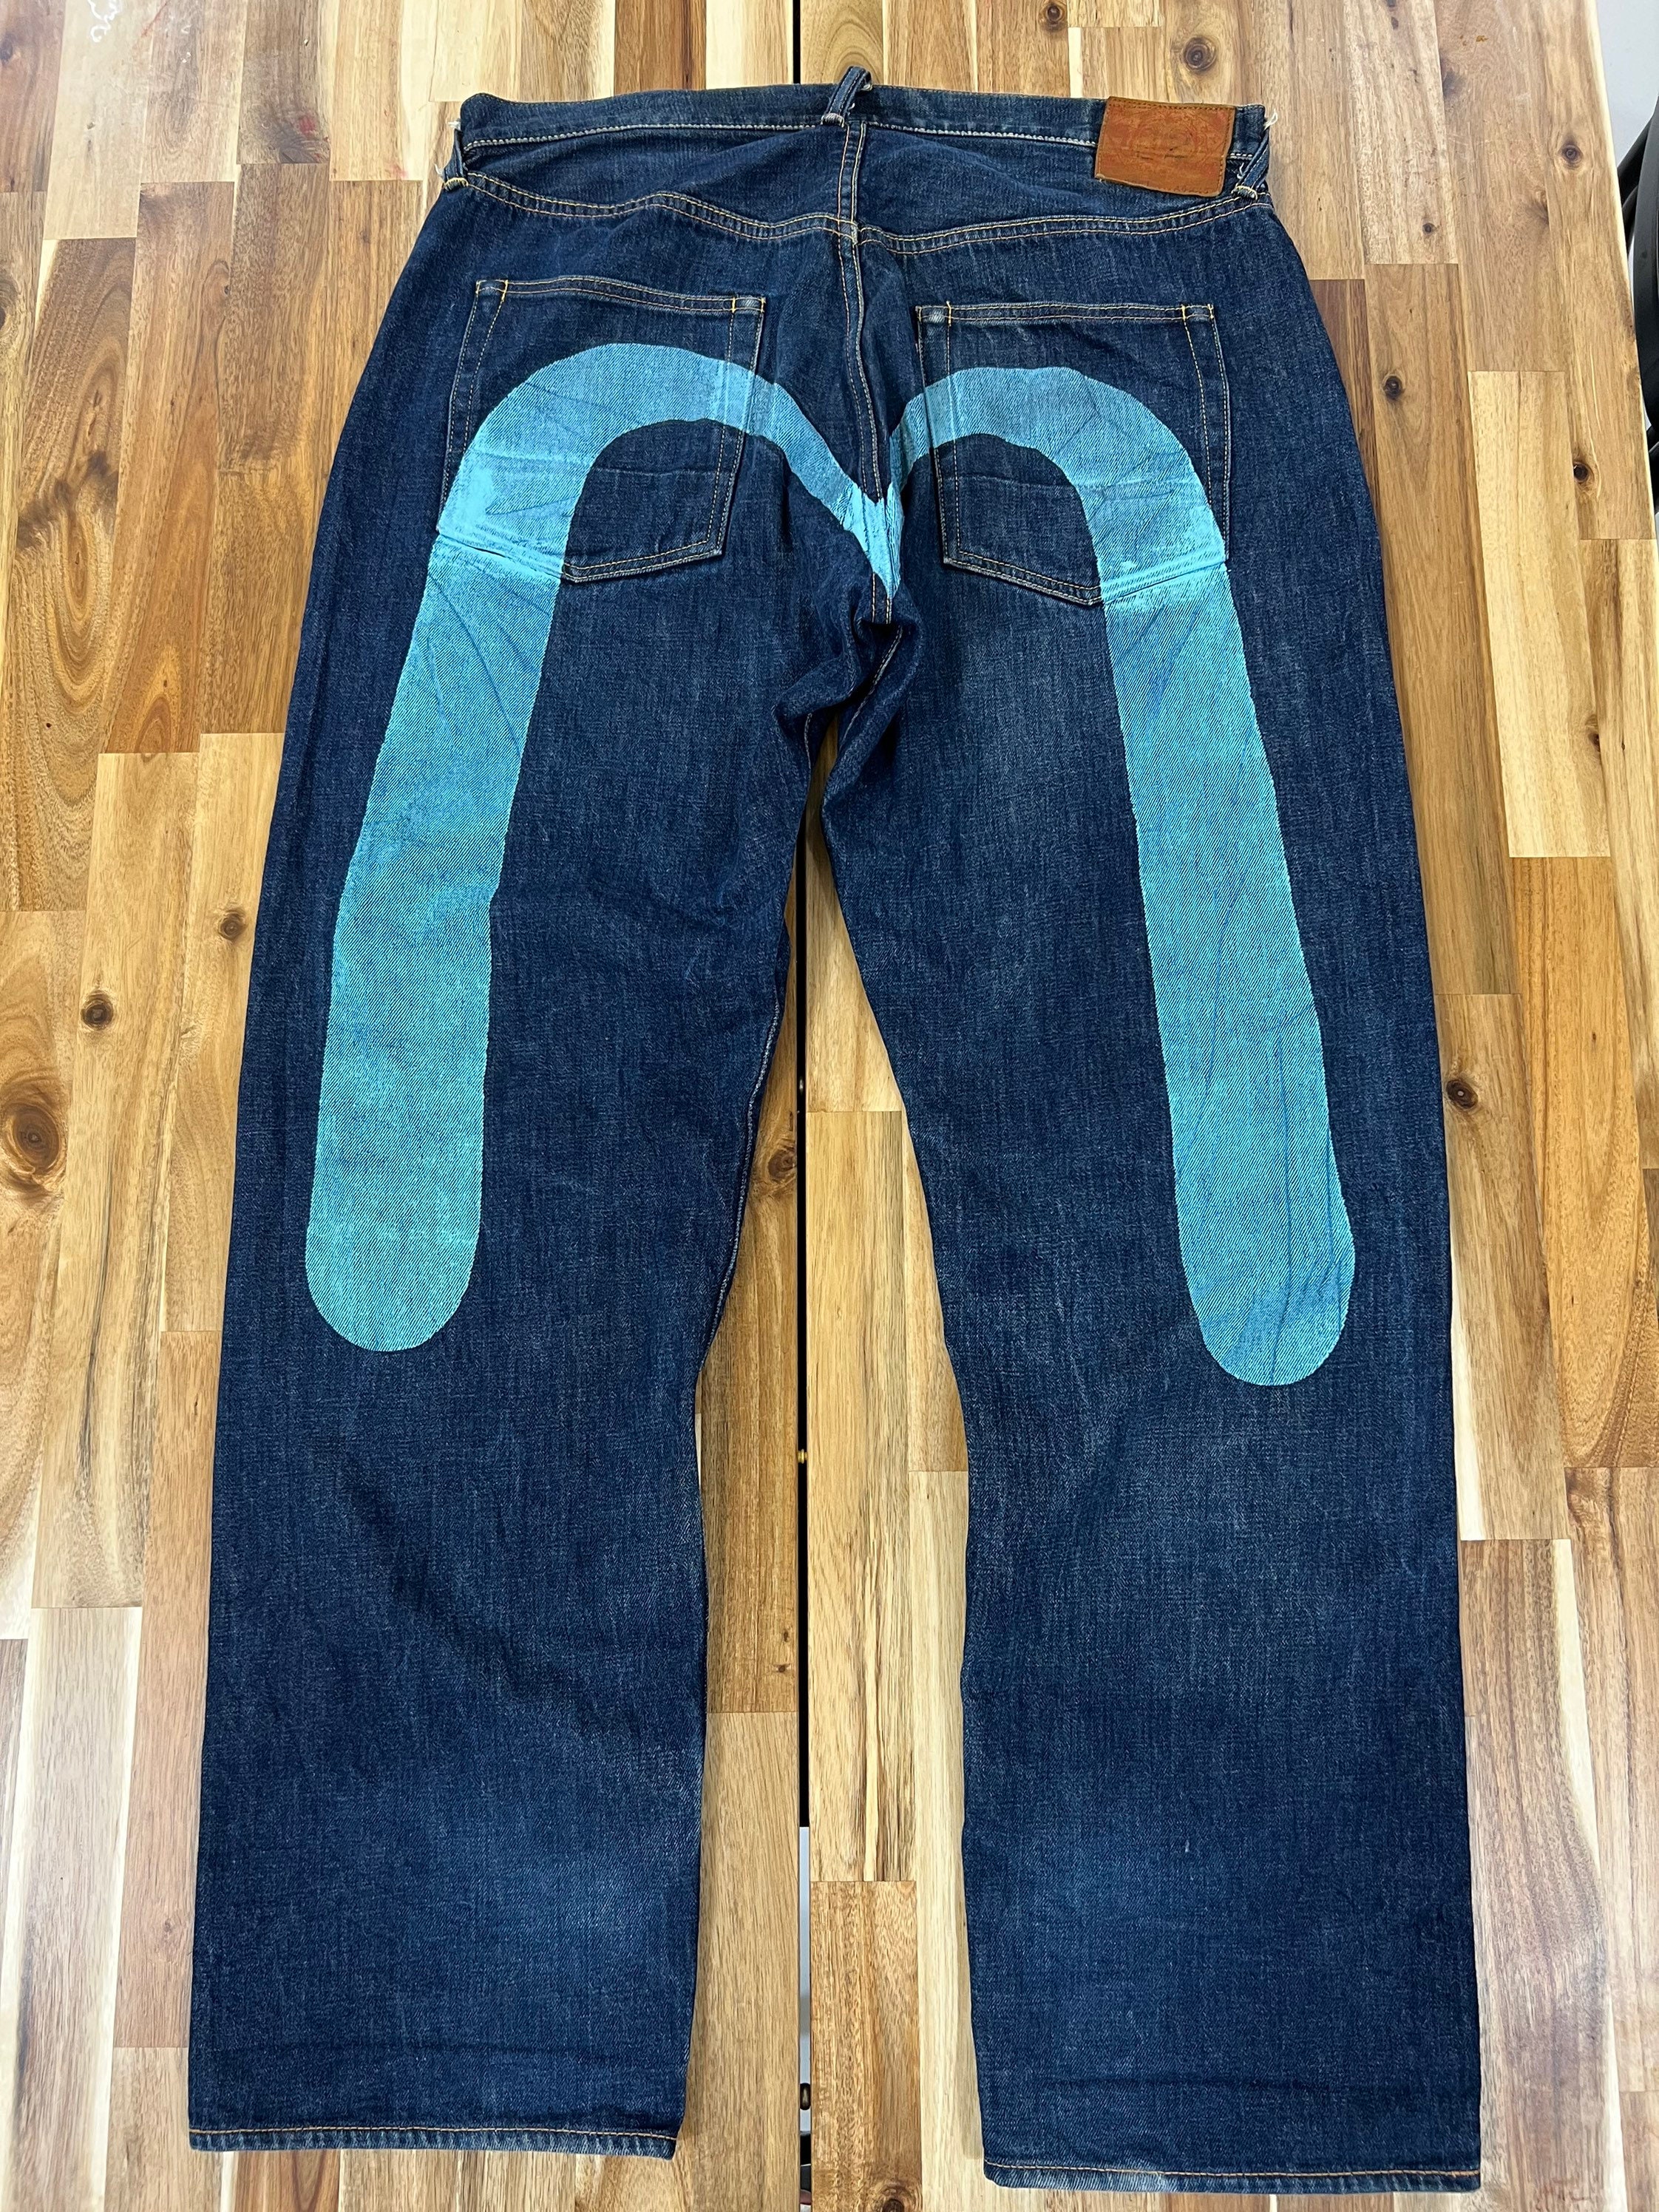 Evisu Jeans by Yamane Large Daicock Selvedge Travis Scott picture image